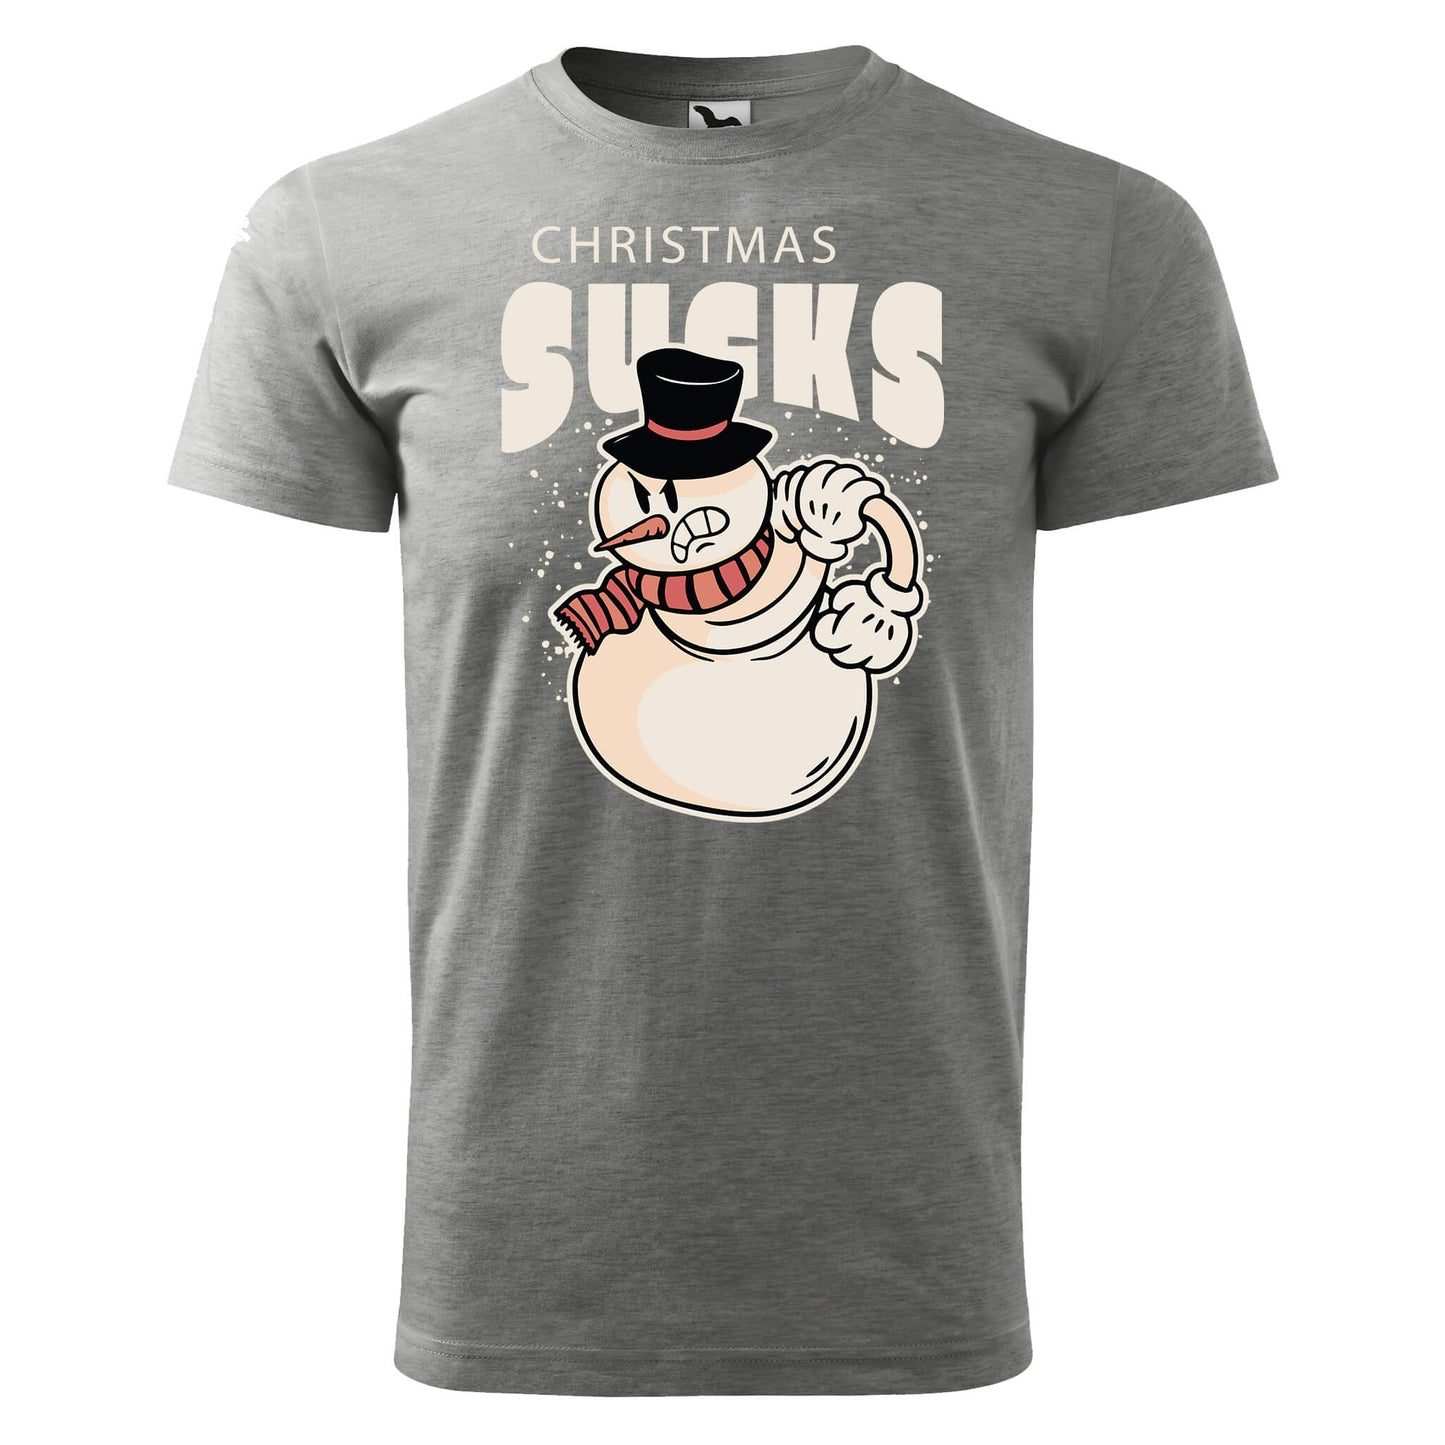 Christmas sucks t-shirt - rvdesignprint